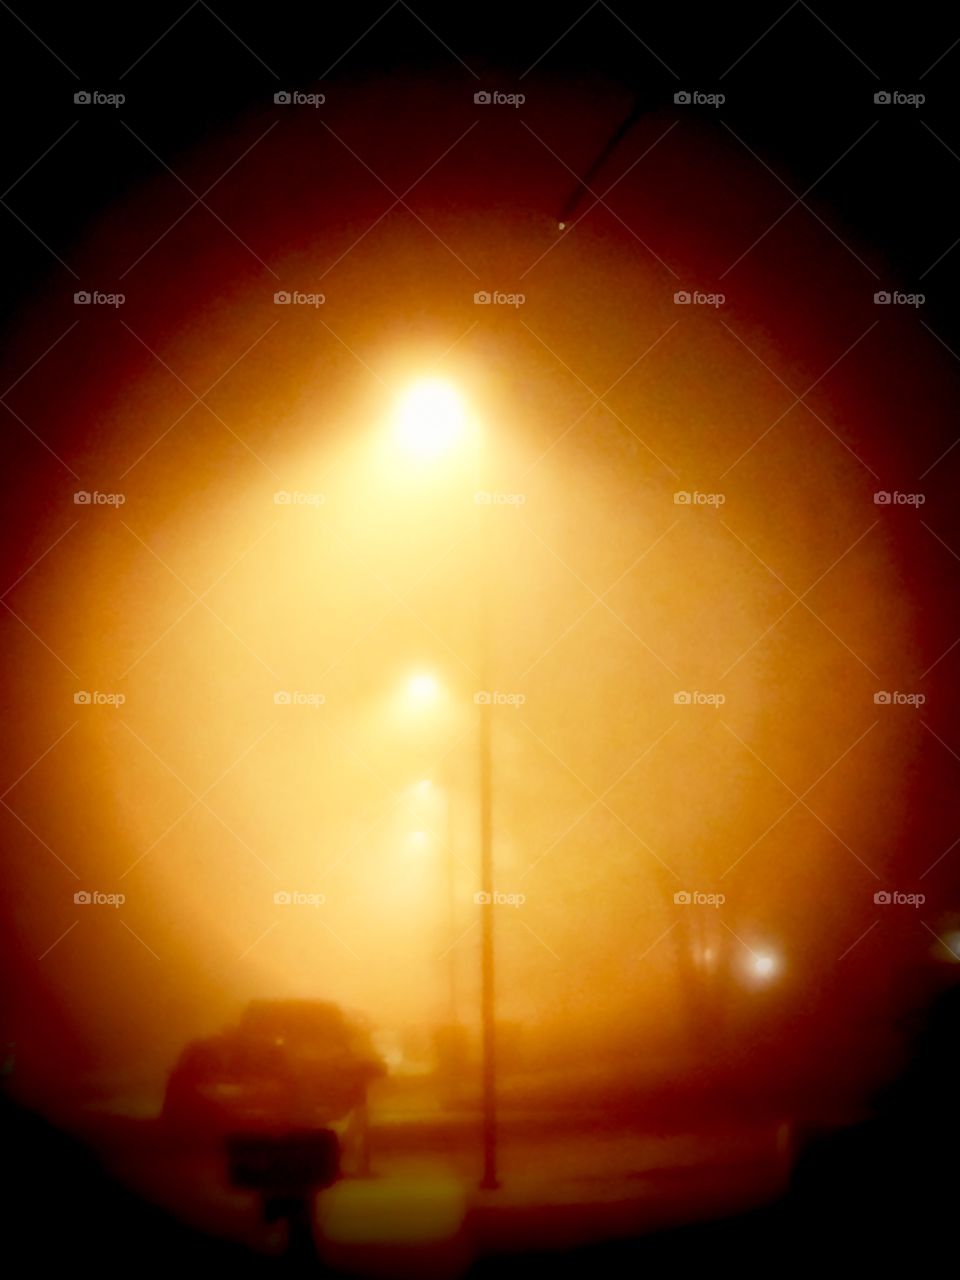 A Mist full of Lights